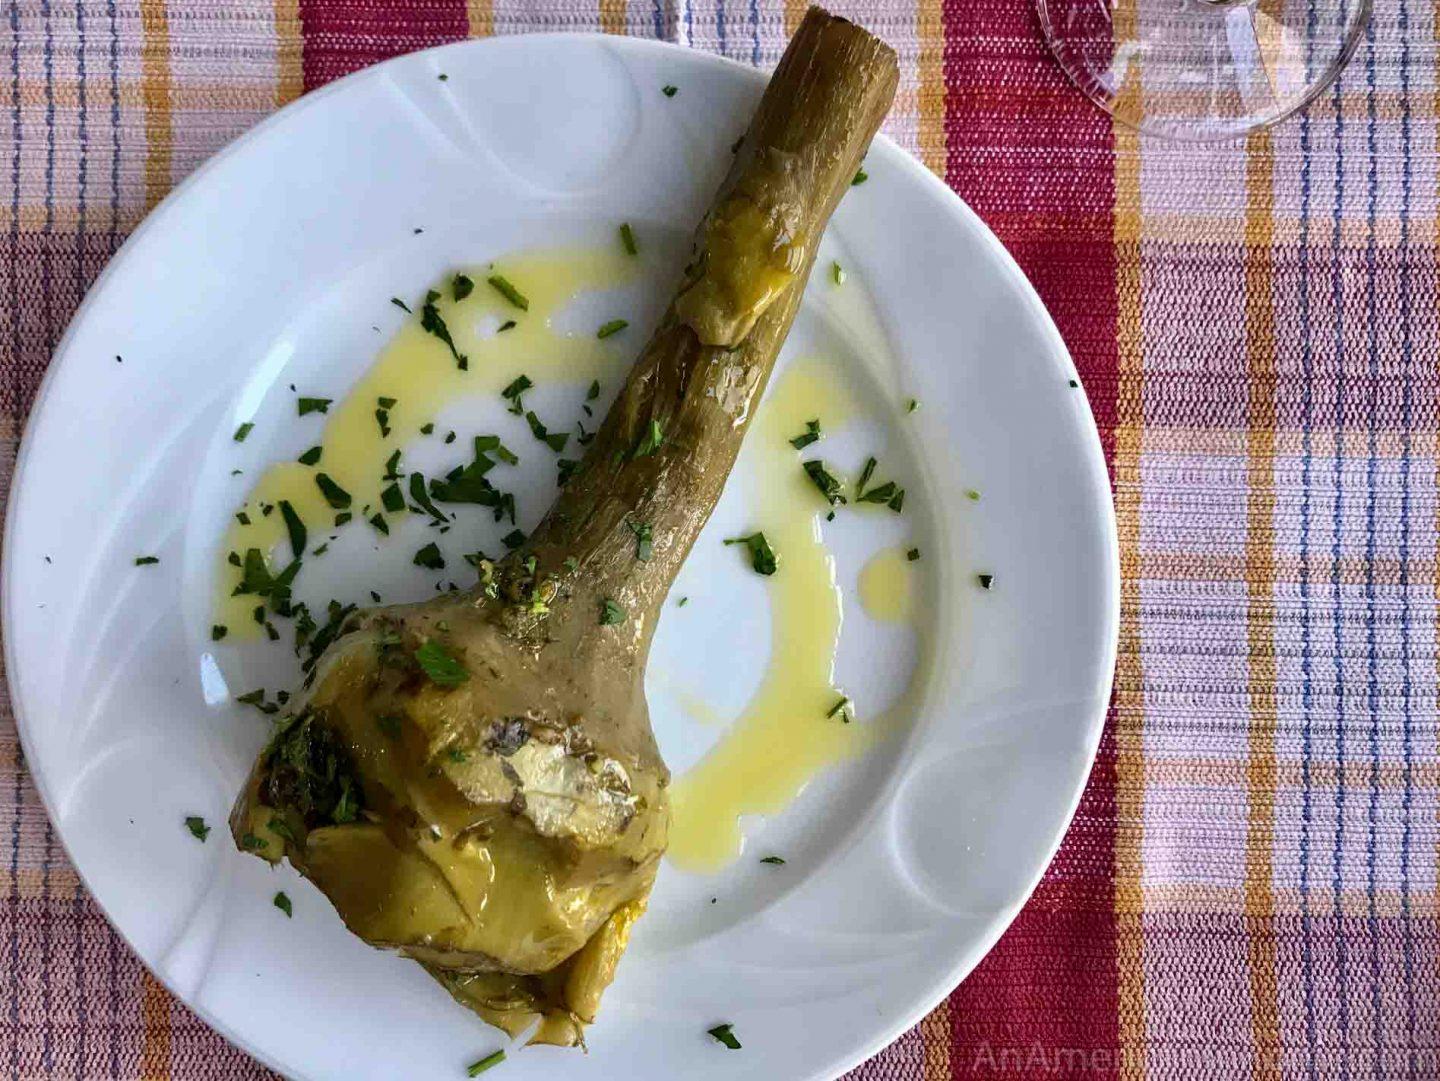 carciofi alla romana served as a whole artichoke in Rome on a white plate